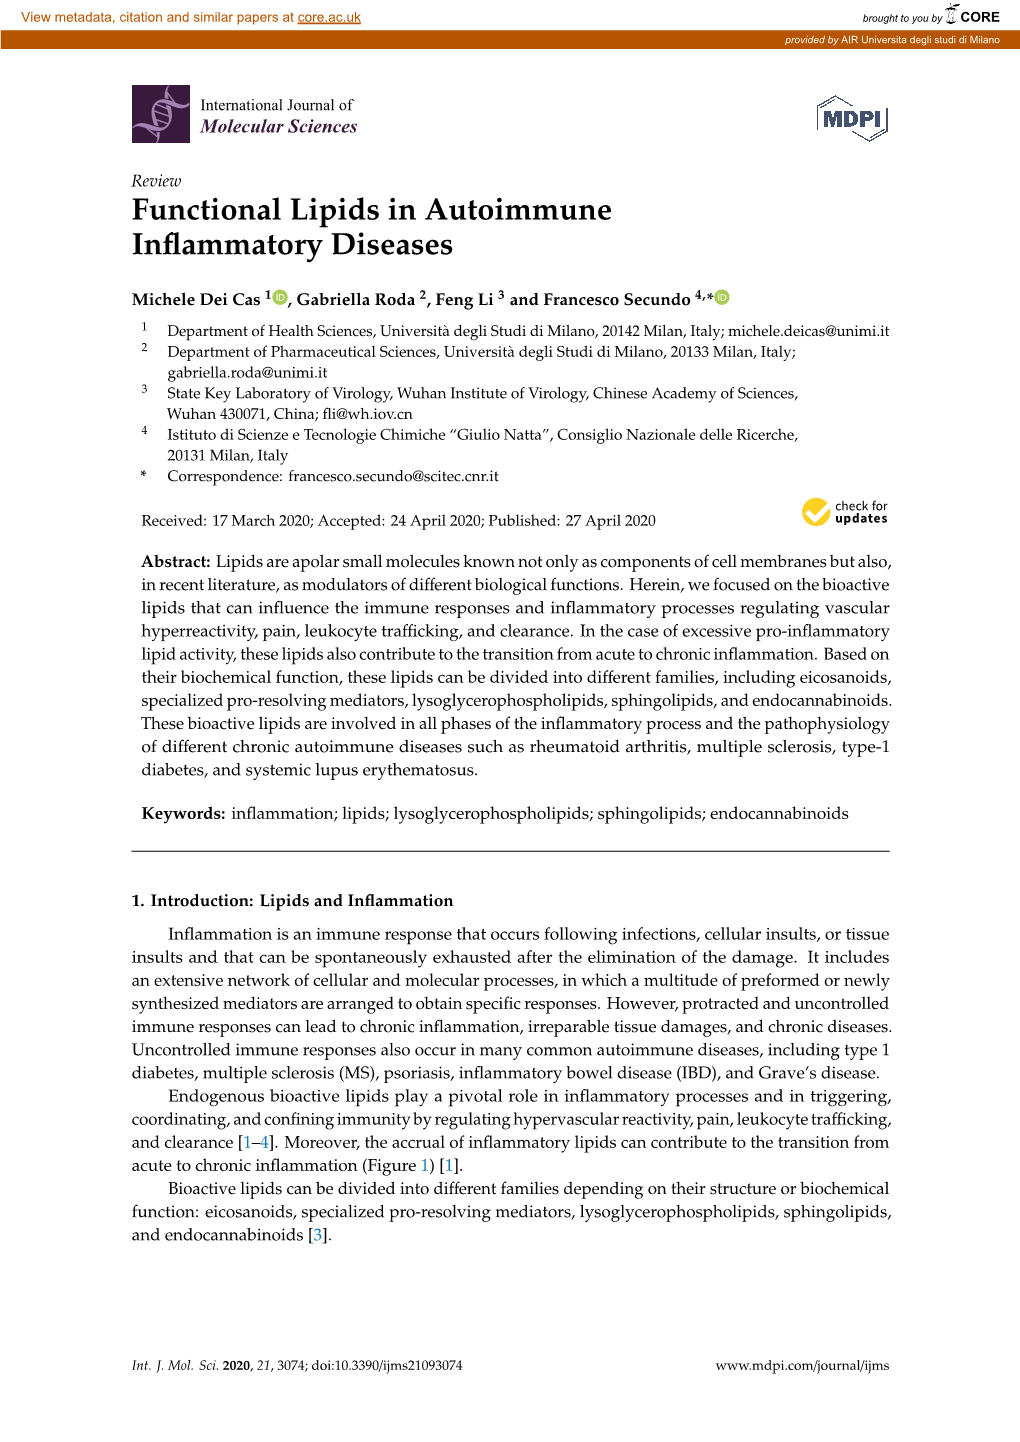 Functional Lipids in Autoimmune Inflammatory Diseases